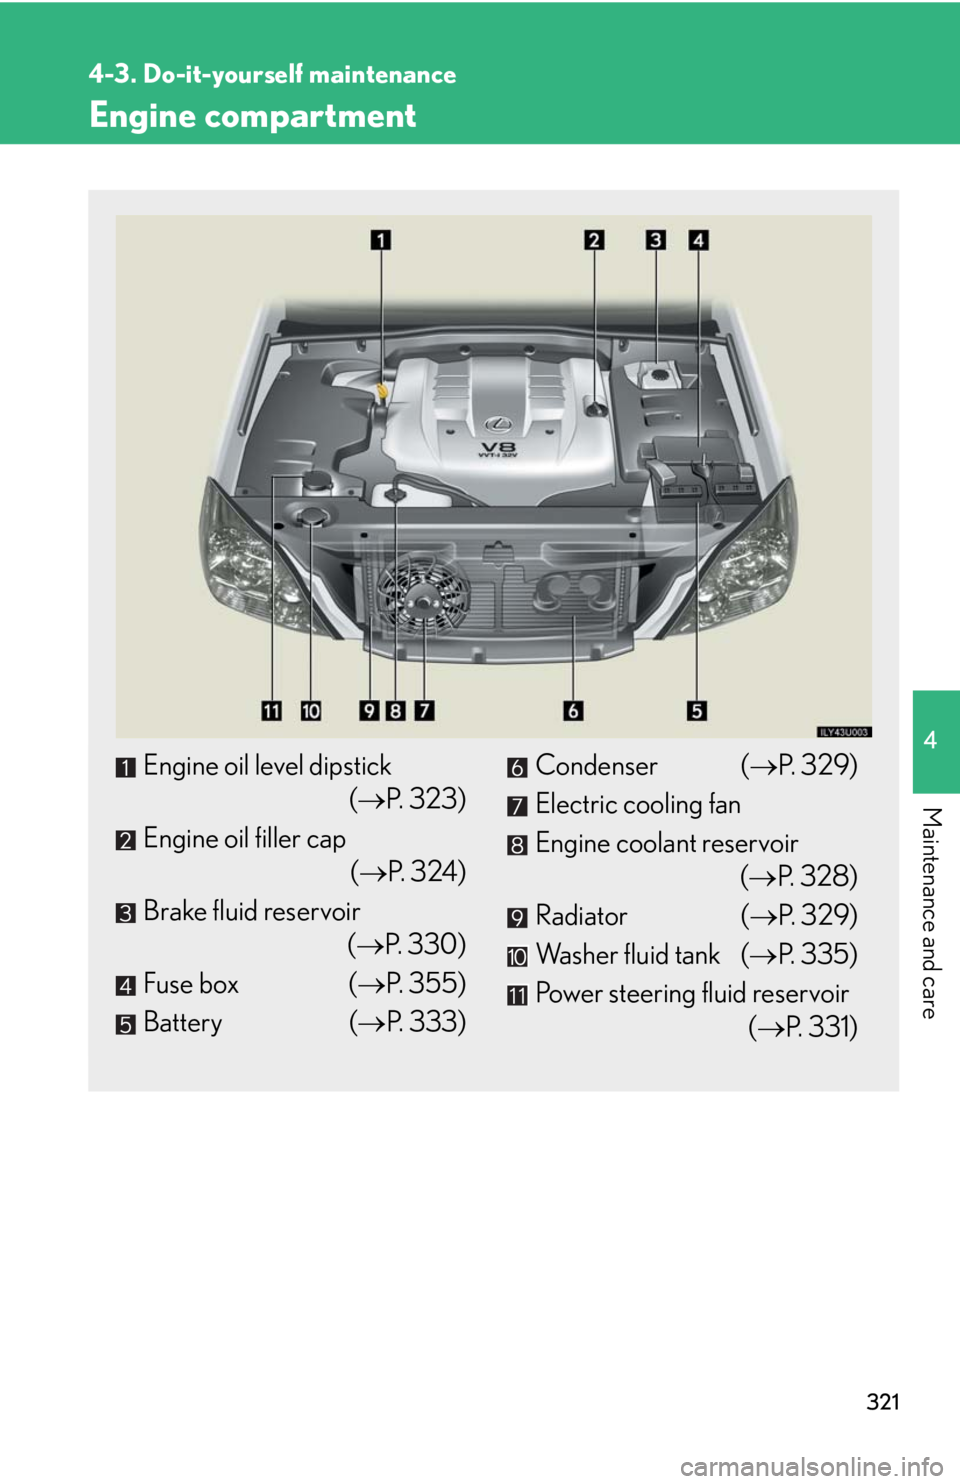 Lexus GX470 2008  Driving Comfort / LEXUS 2008 GX470 OWNERS MANUAL (OM60D82U) 321
4-3. Do-it-yourself maintenance
4
Maintenance and care
Engine compartment
Engine oil level dipstick(P. 323)
Engine oil filler cap (P. 324)
Brake fluid reservoir (P. 330)
Fuse box ( P. 